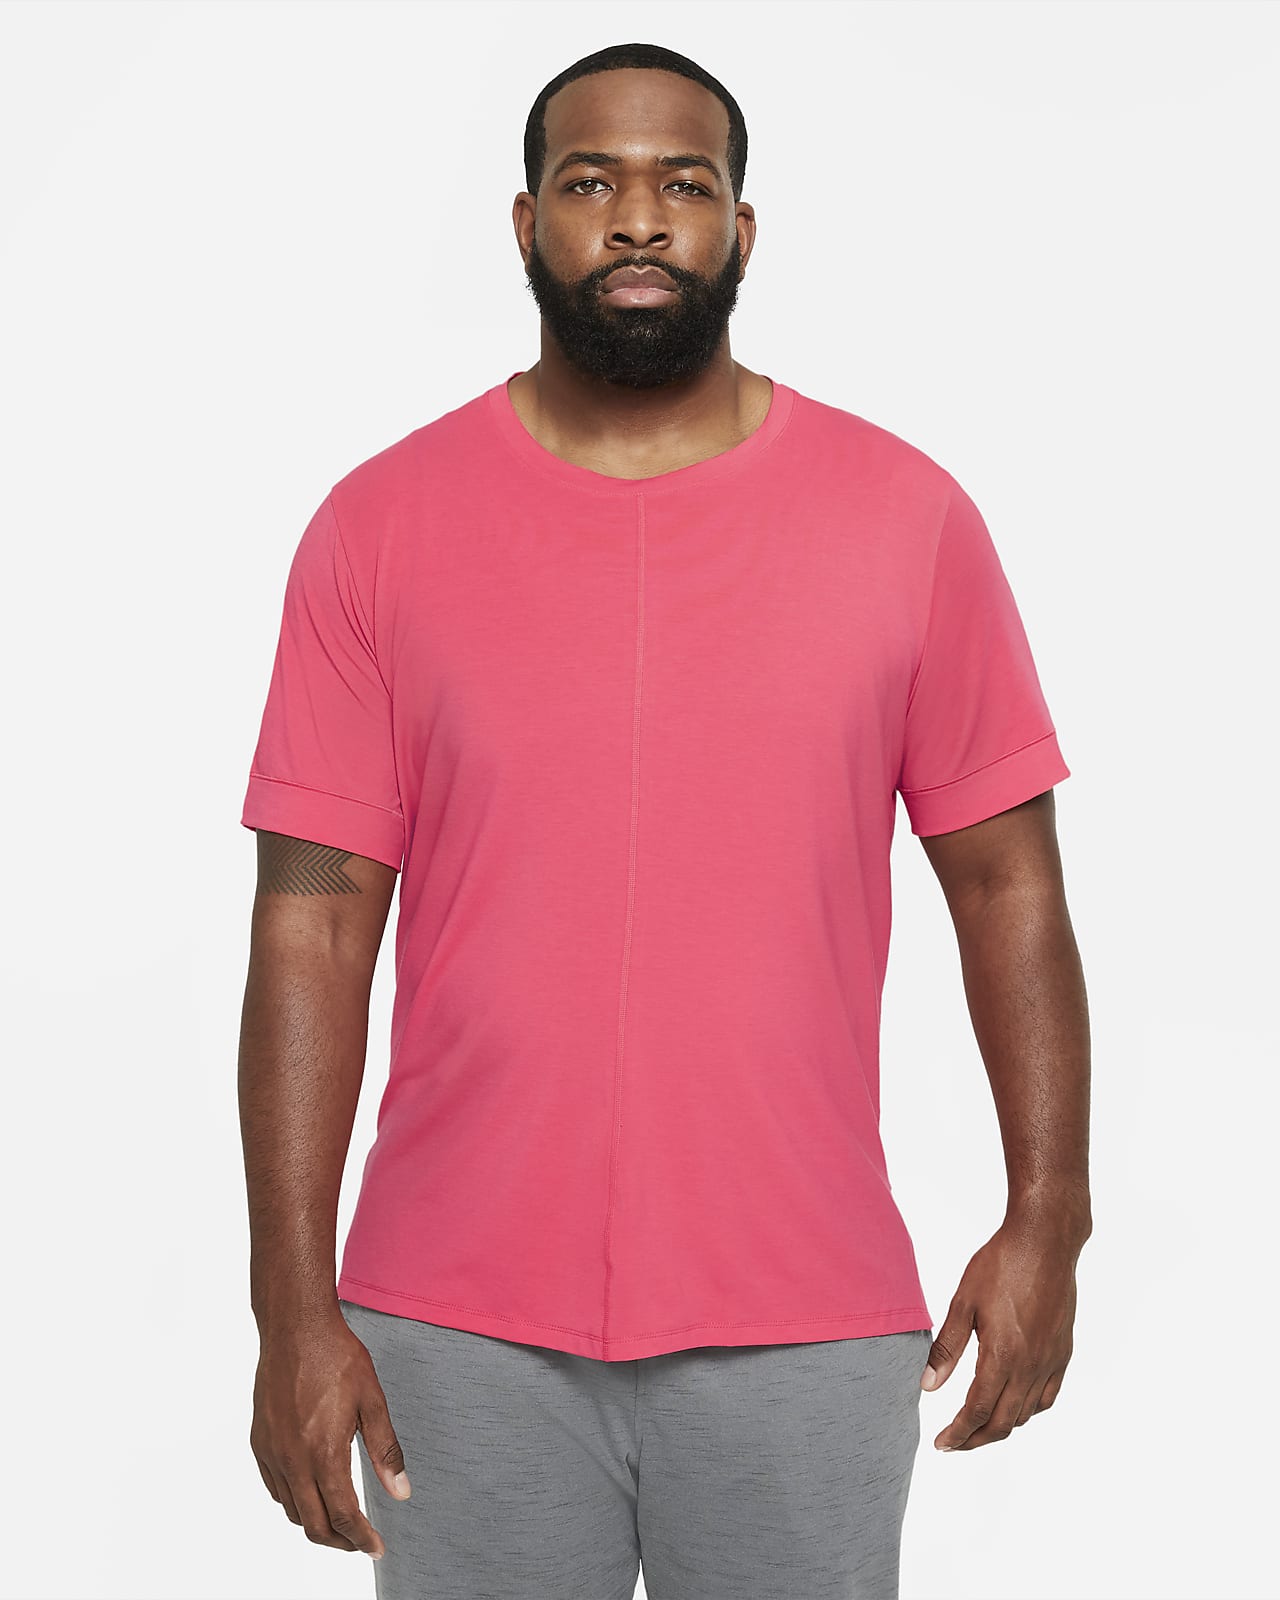 Nike Yoga Dri-FIT Men's Short-Sleeve Top